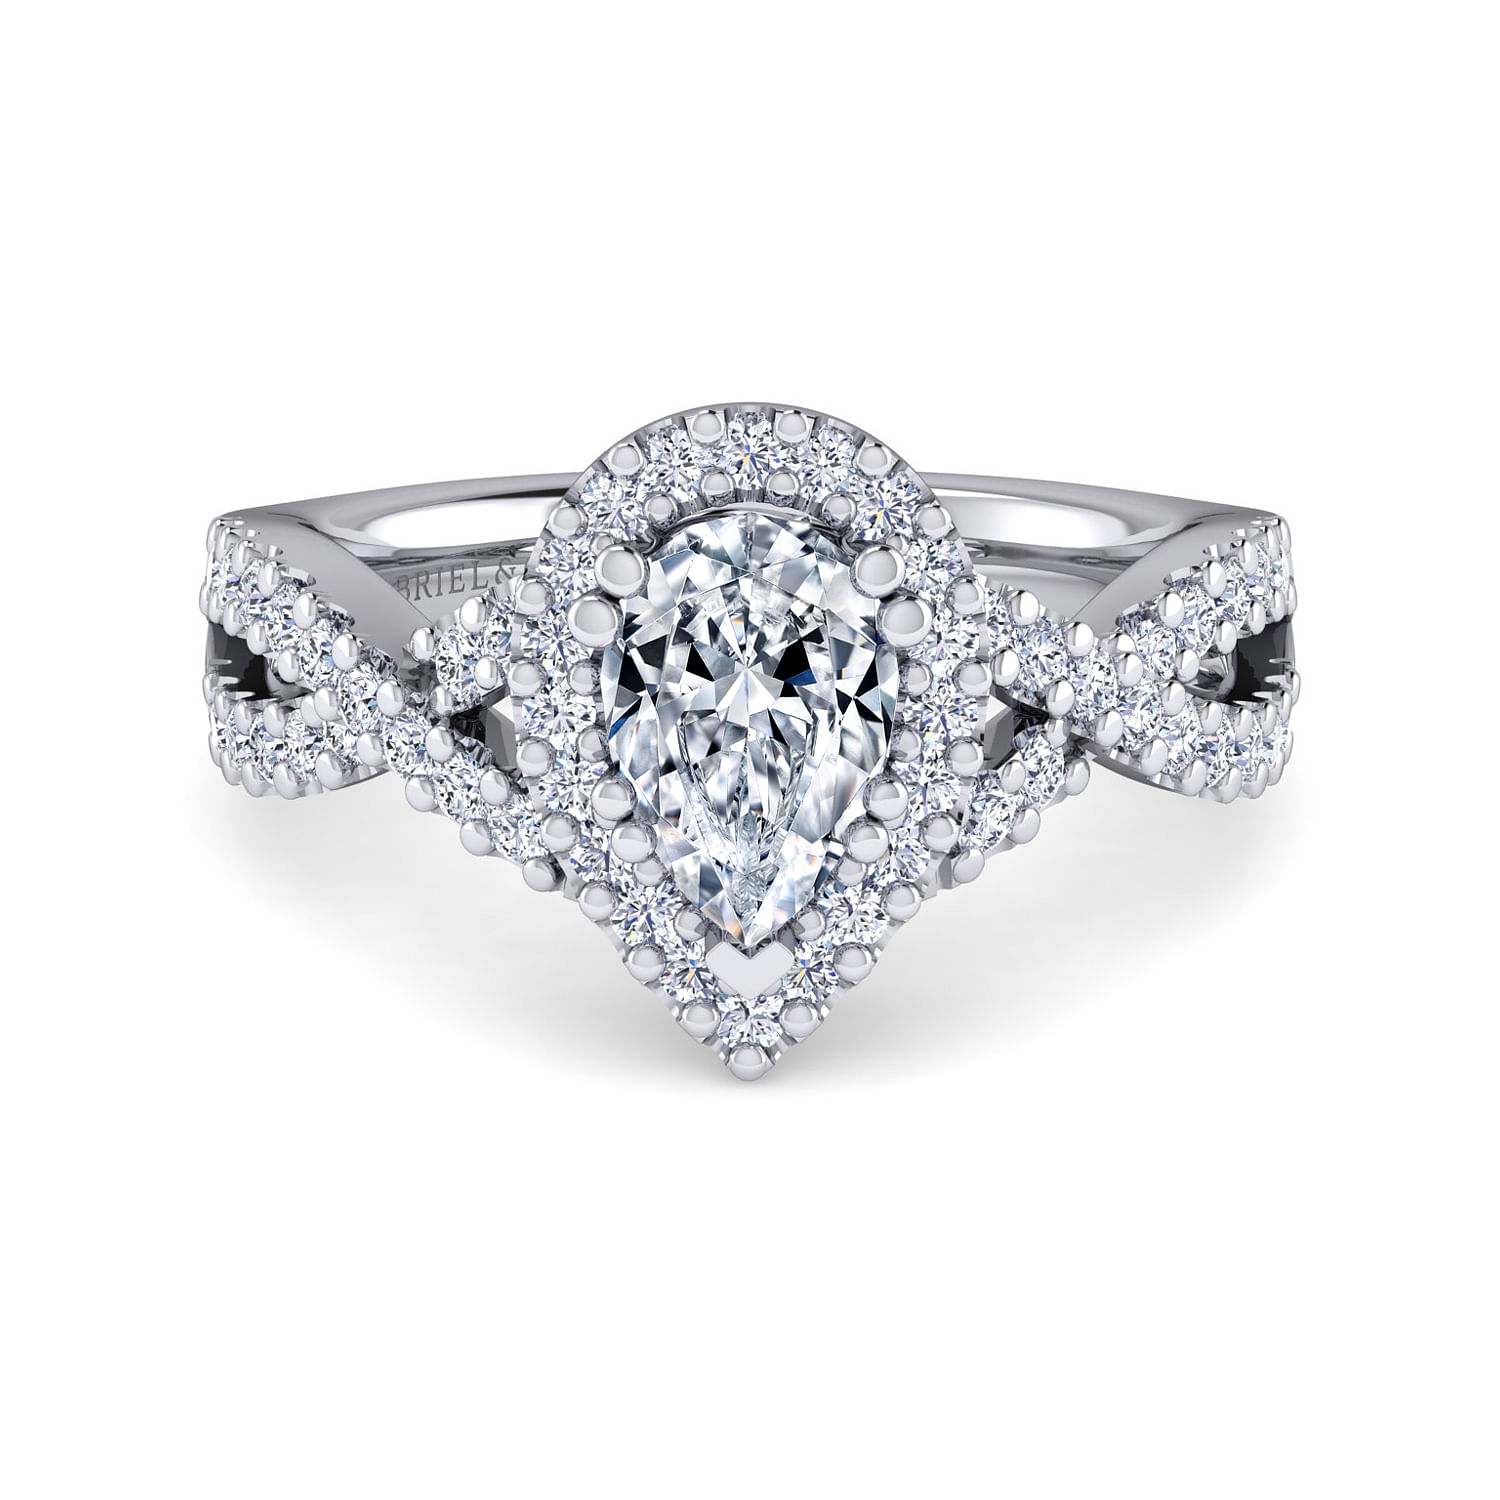 Kendie---Platinum-Pear-Shape-Halo-Diamond-Engagement-Ring1